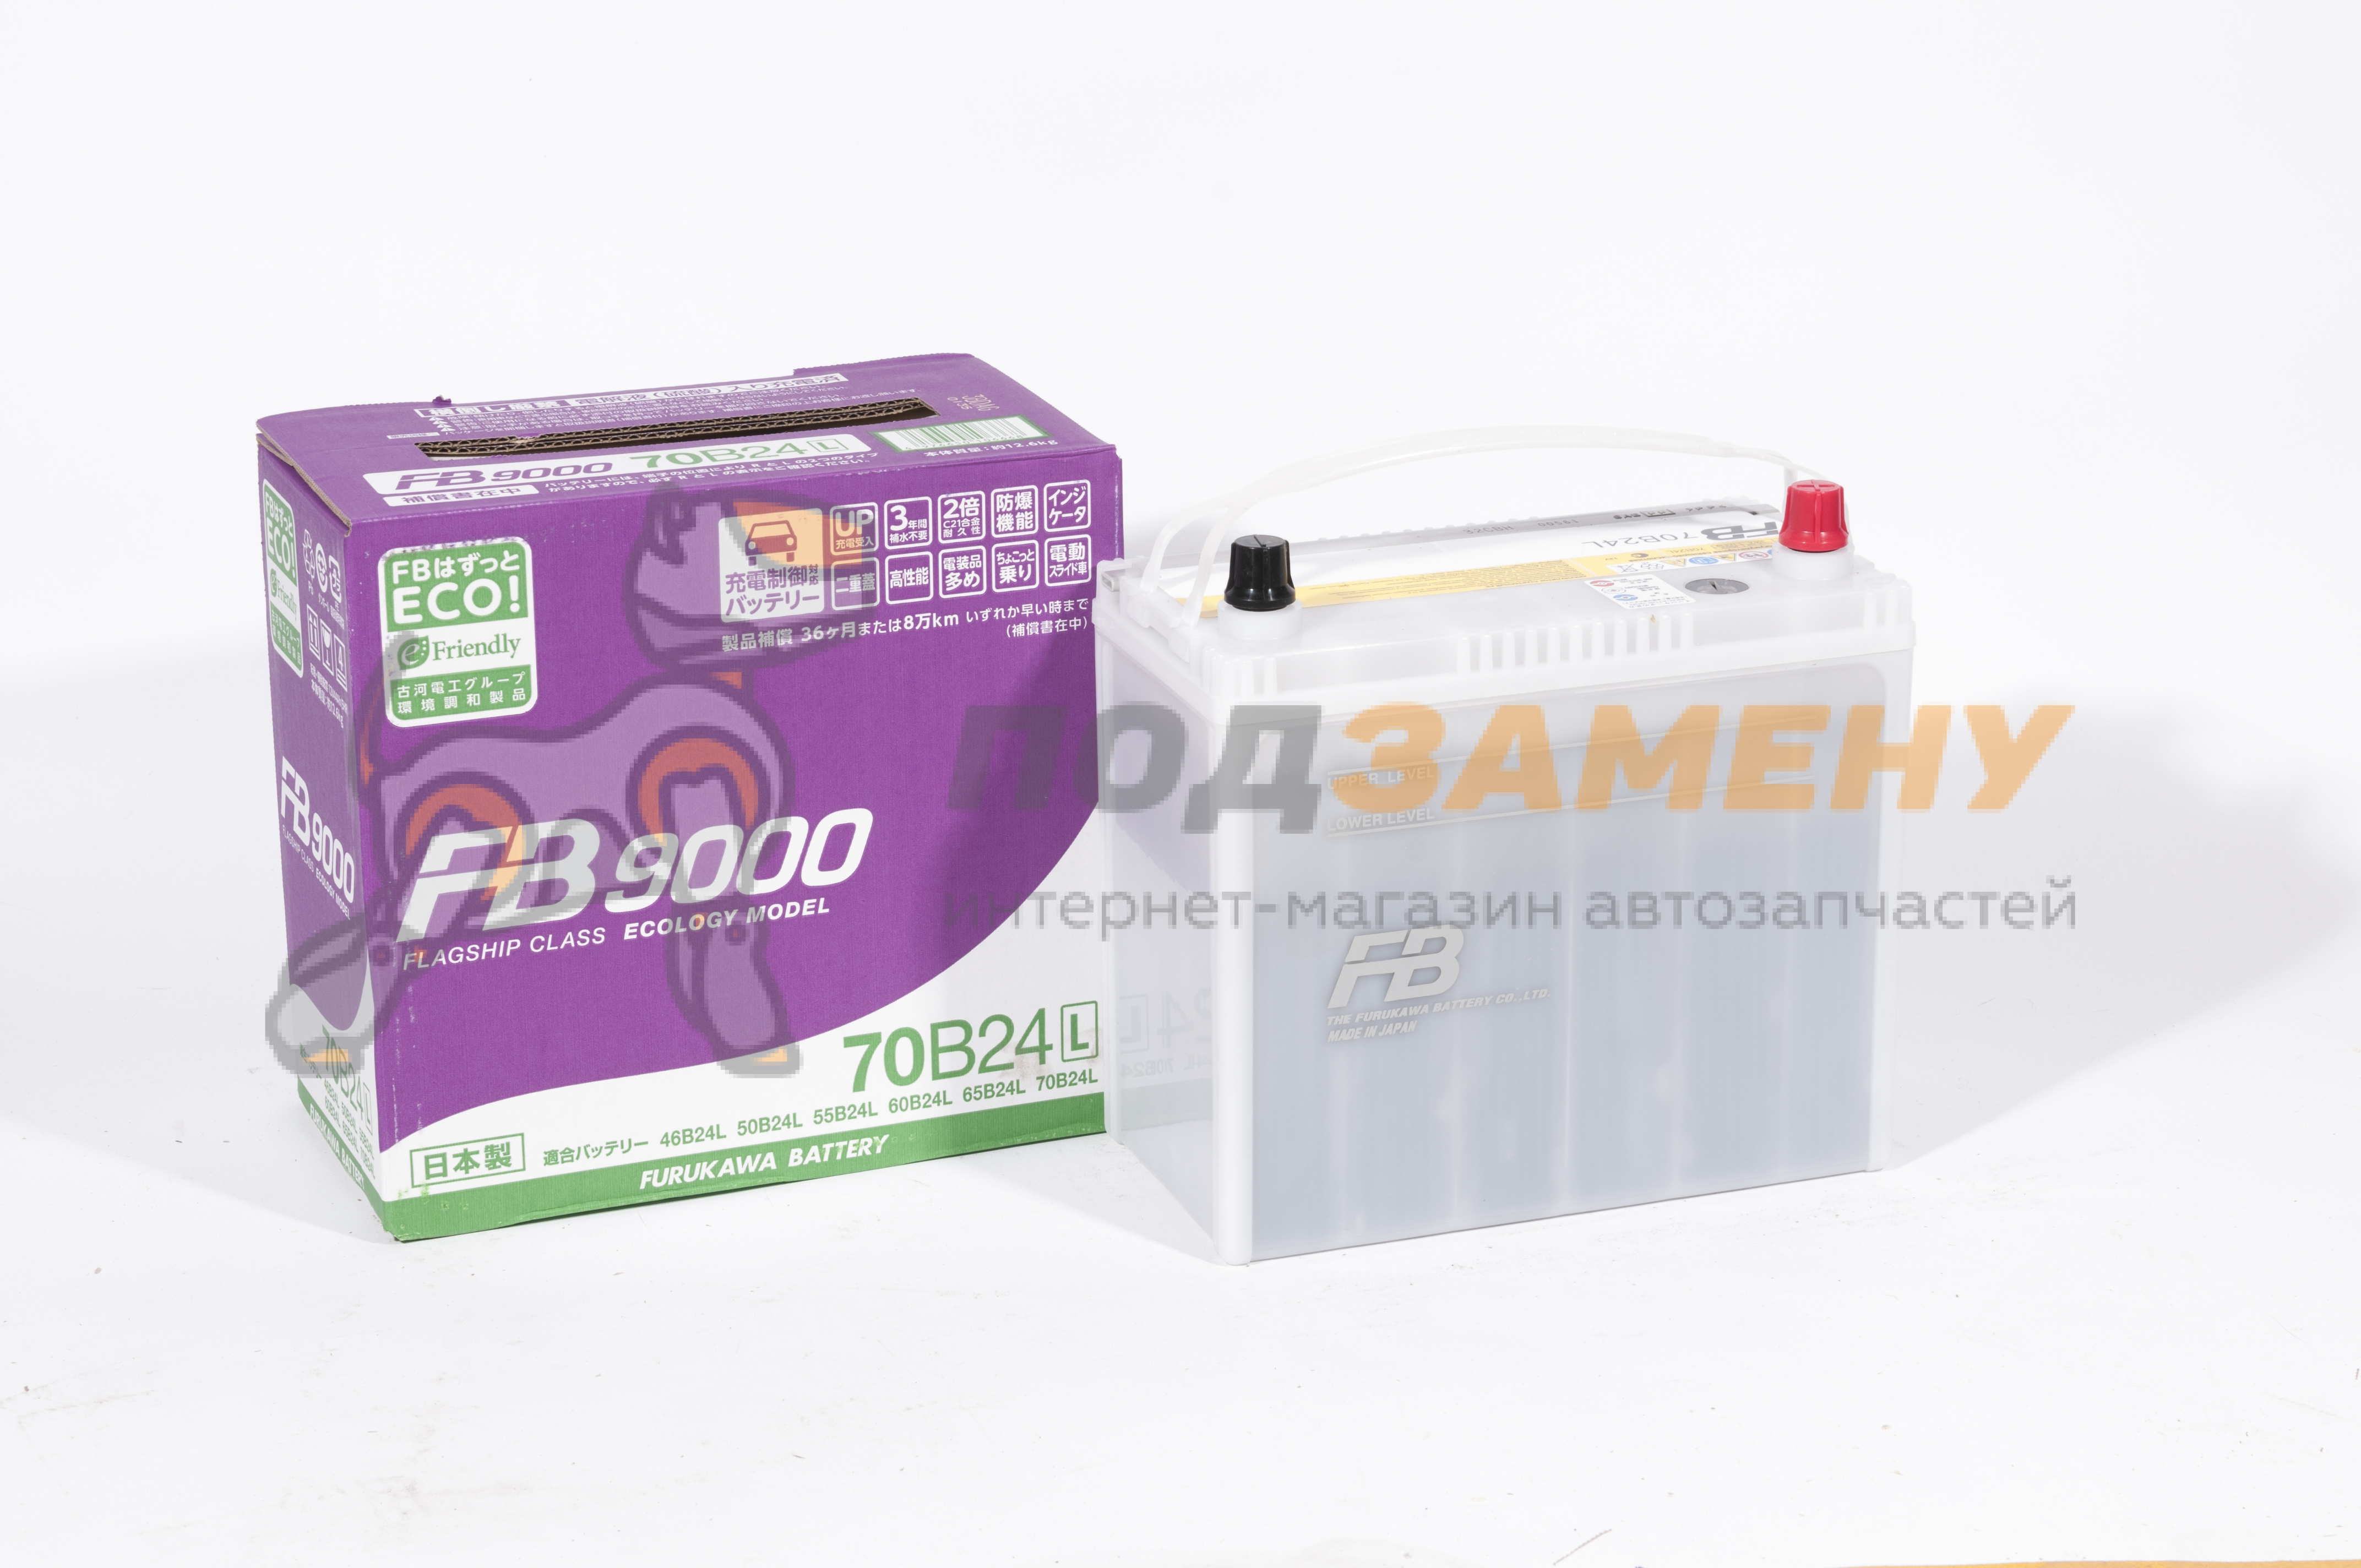 Furukawa battery fb. Автомобильный аккумулятор Furukawa Battery fb9000 125d31r. Fb9000 125d31l. Автомобильный аккумулятор Furukawa Battery fb9000 85d23r. Автомобильный аккумулятор fb 9000 125d31l (92).